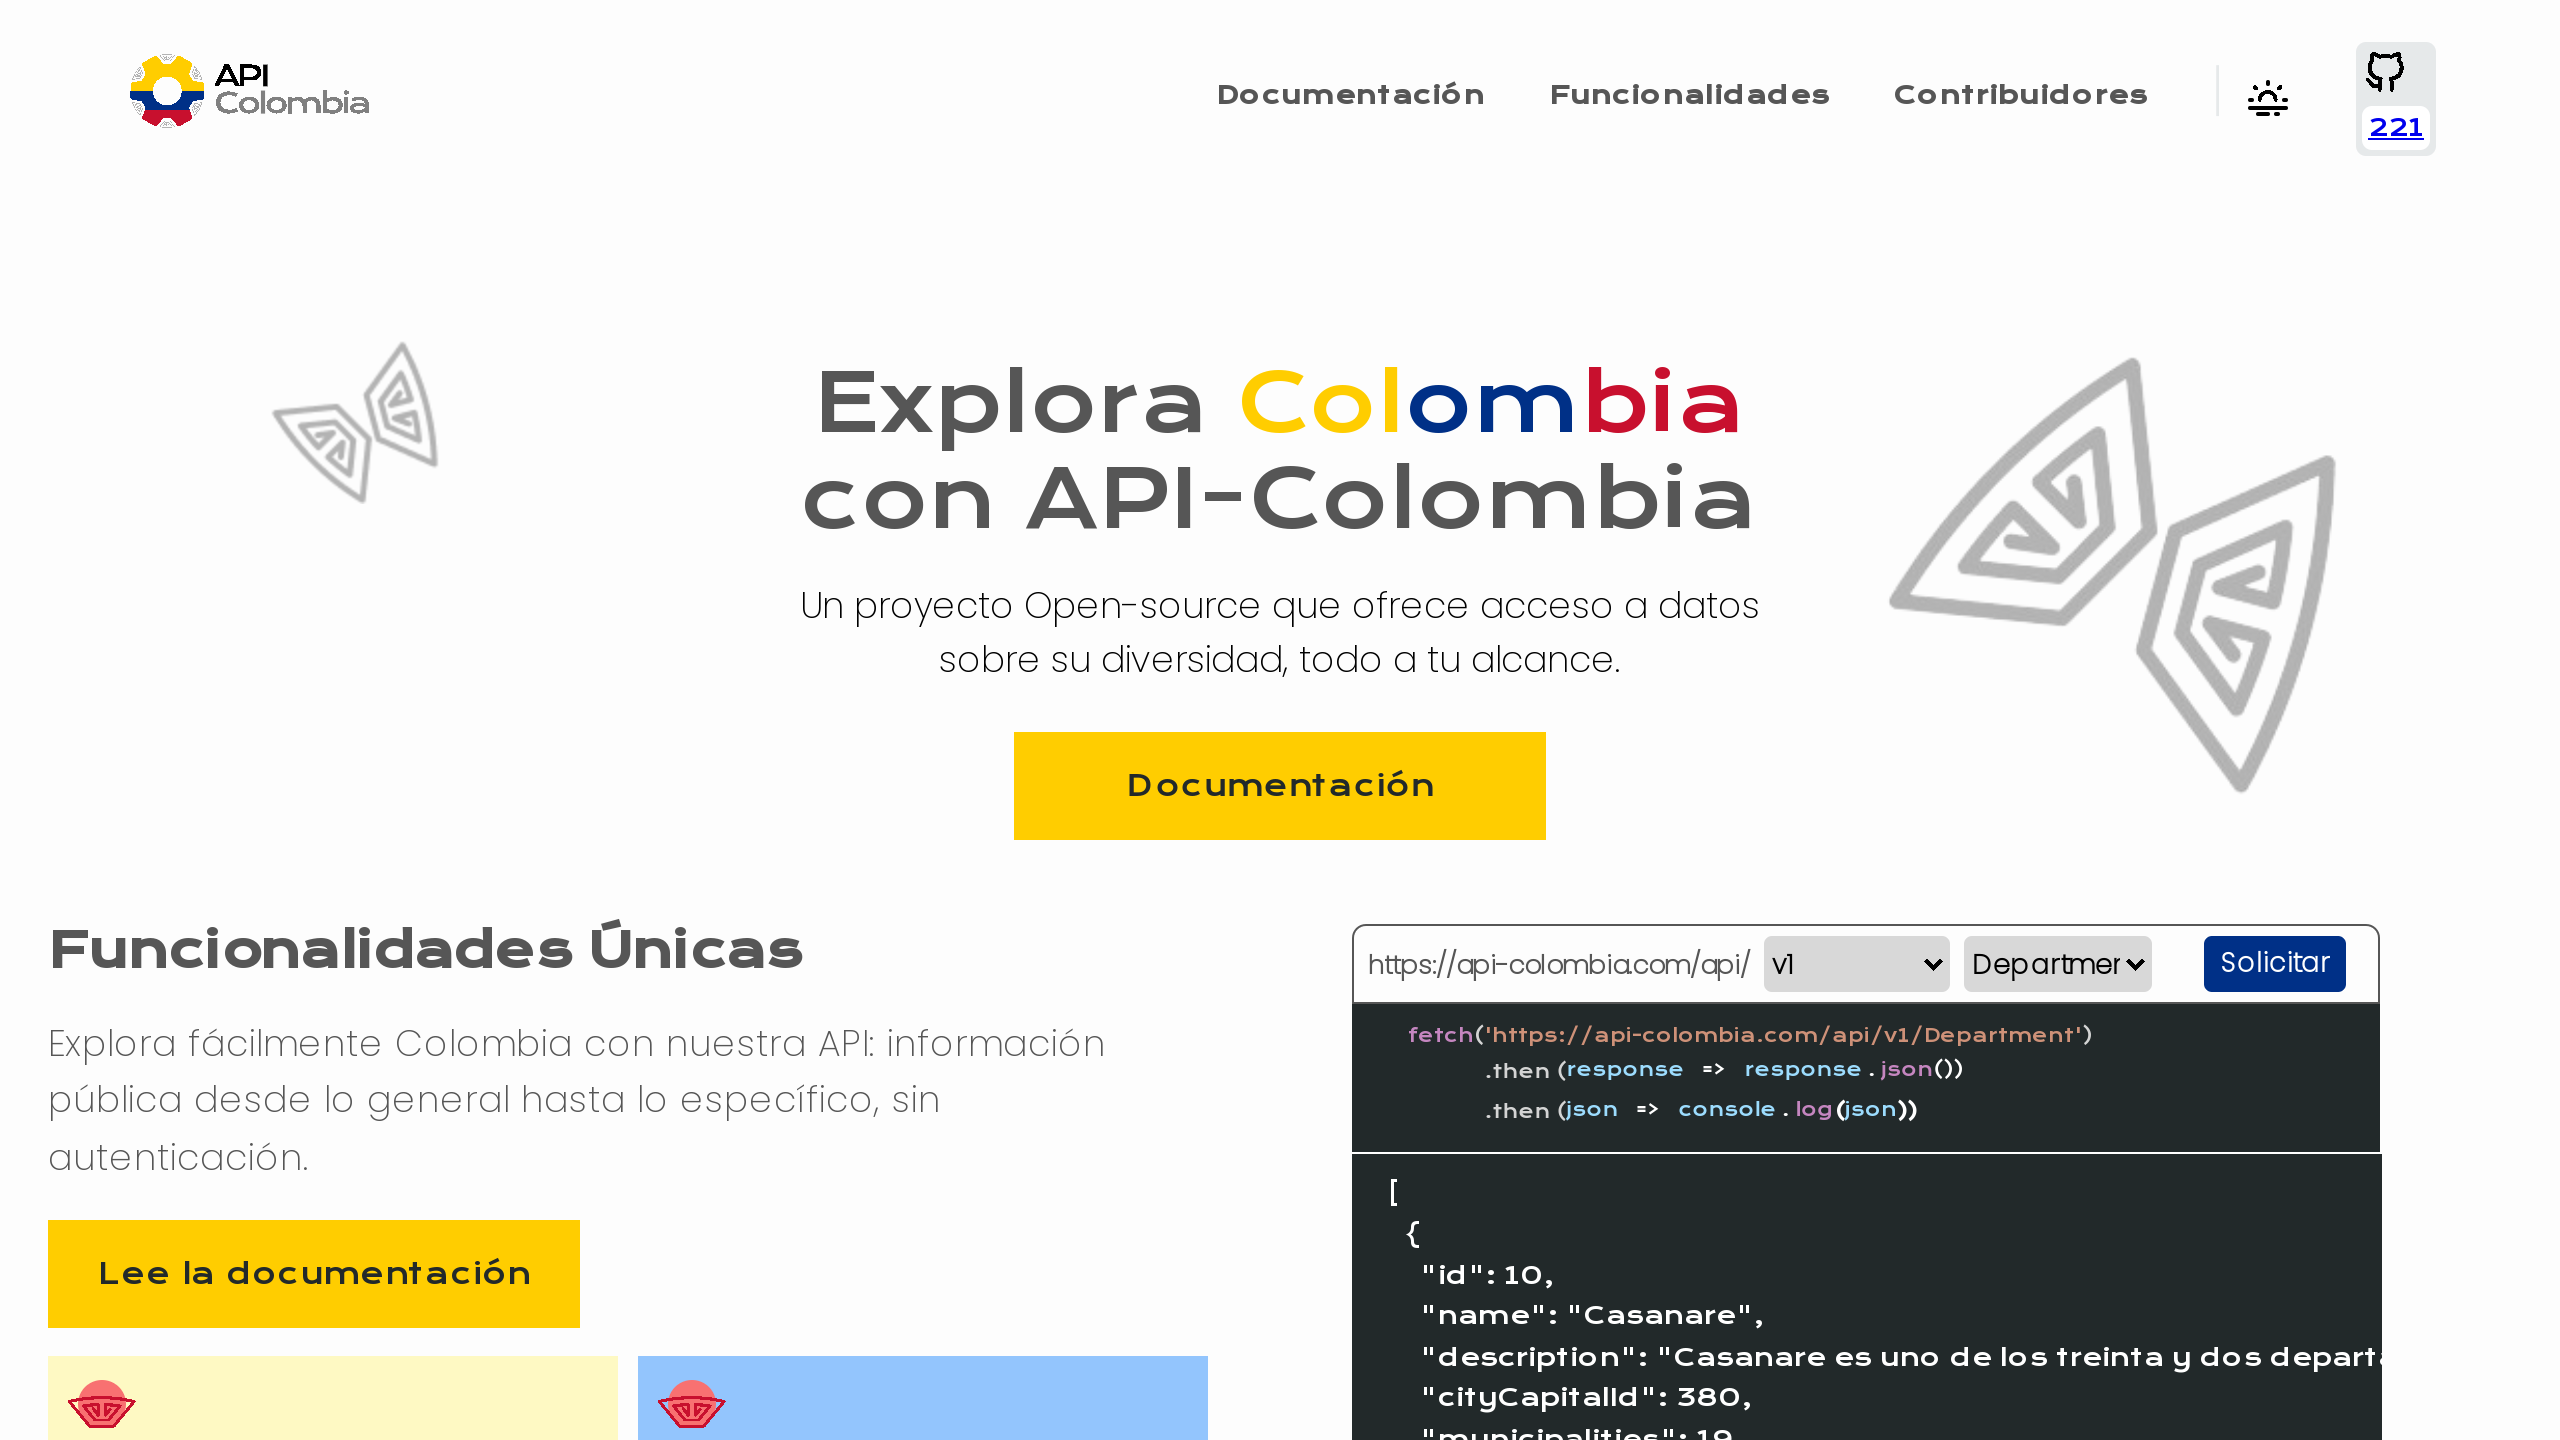 Api Colombia's website screenshot